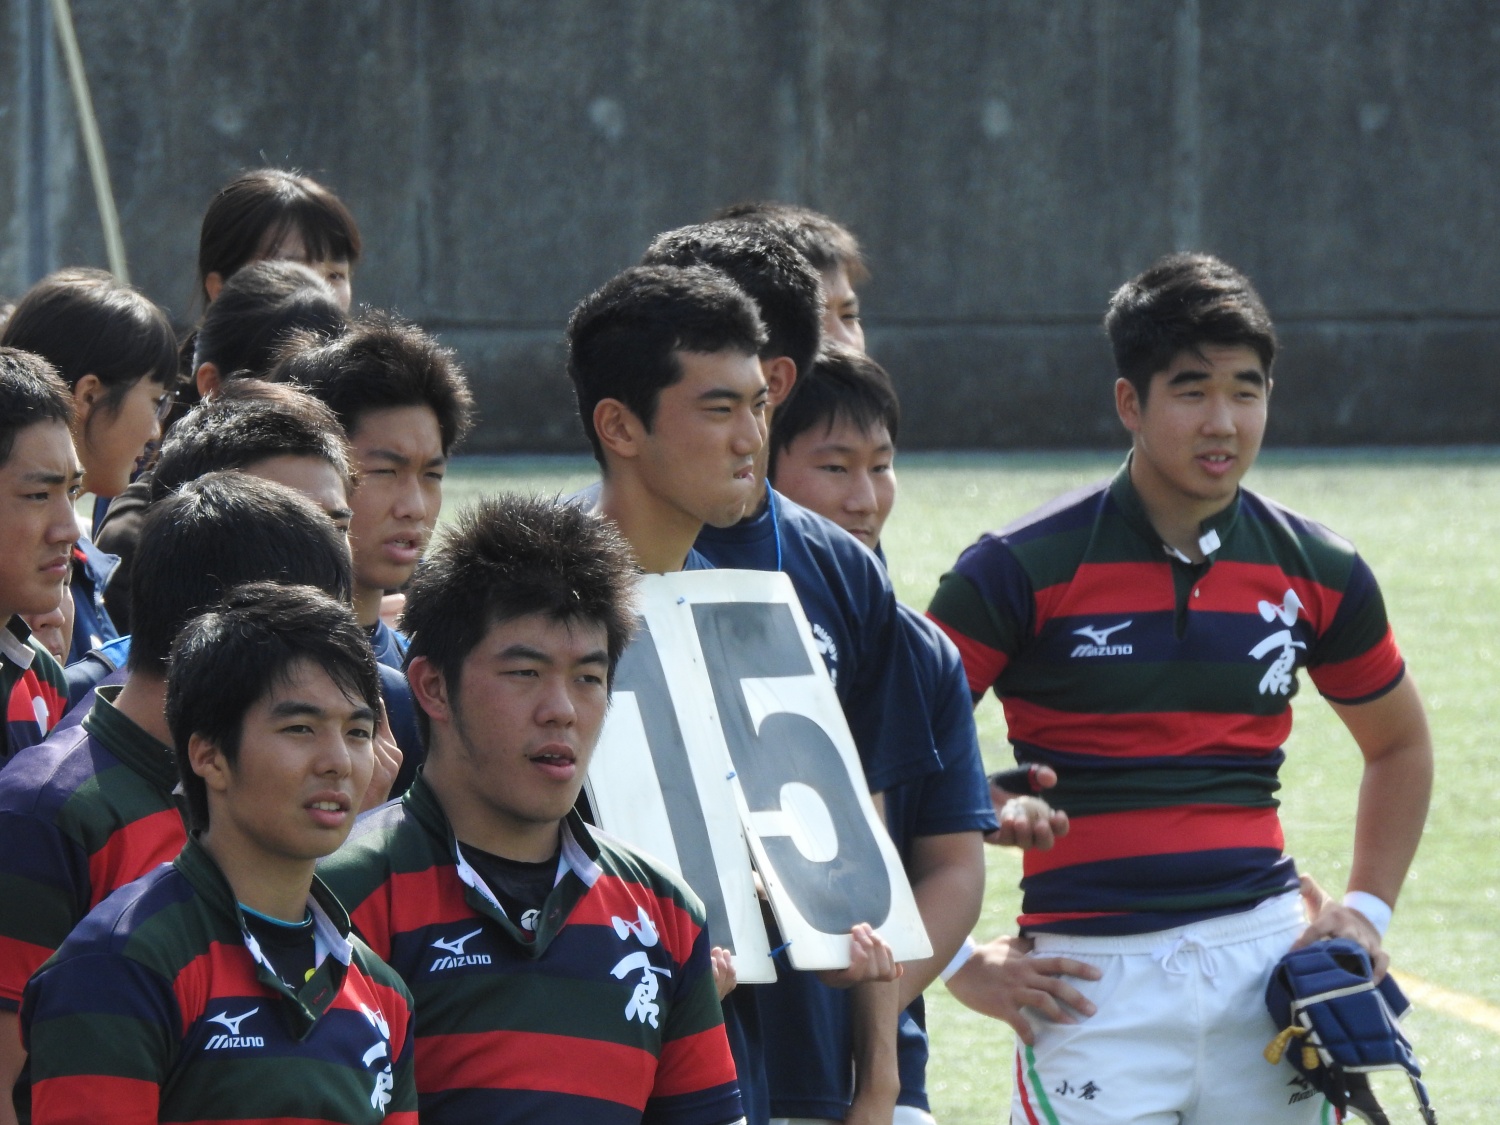 http://kokura-rugby.sakura.ne.jp/DSCN8376_xlarge.JPG